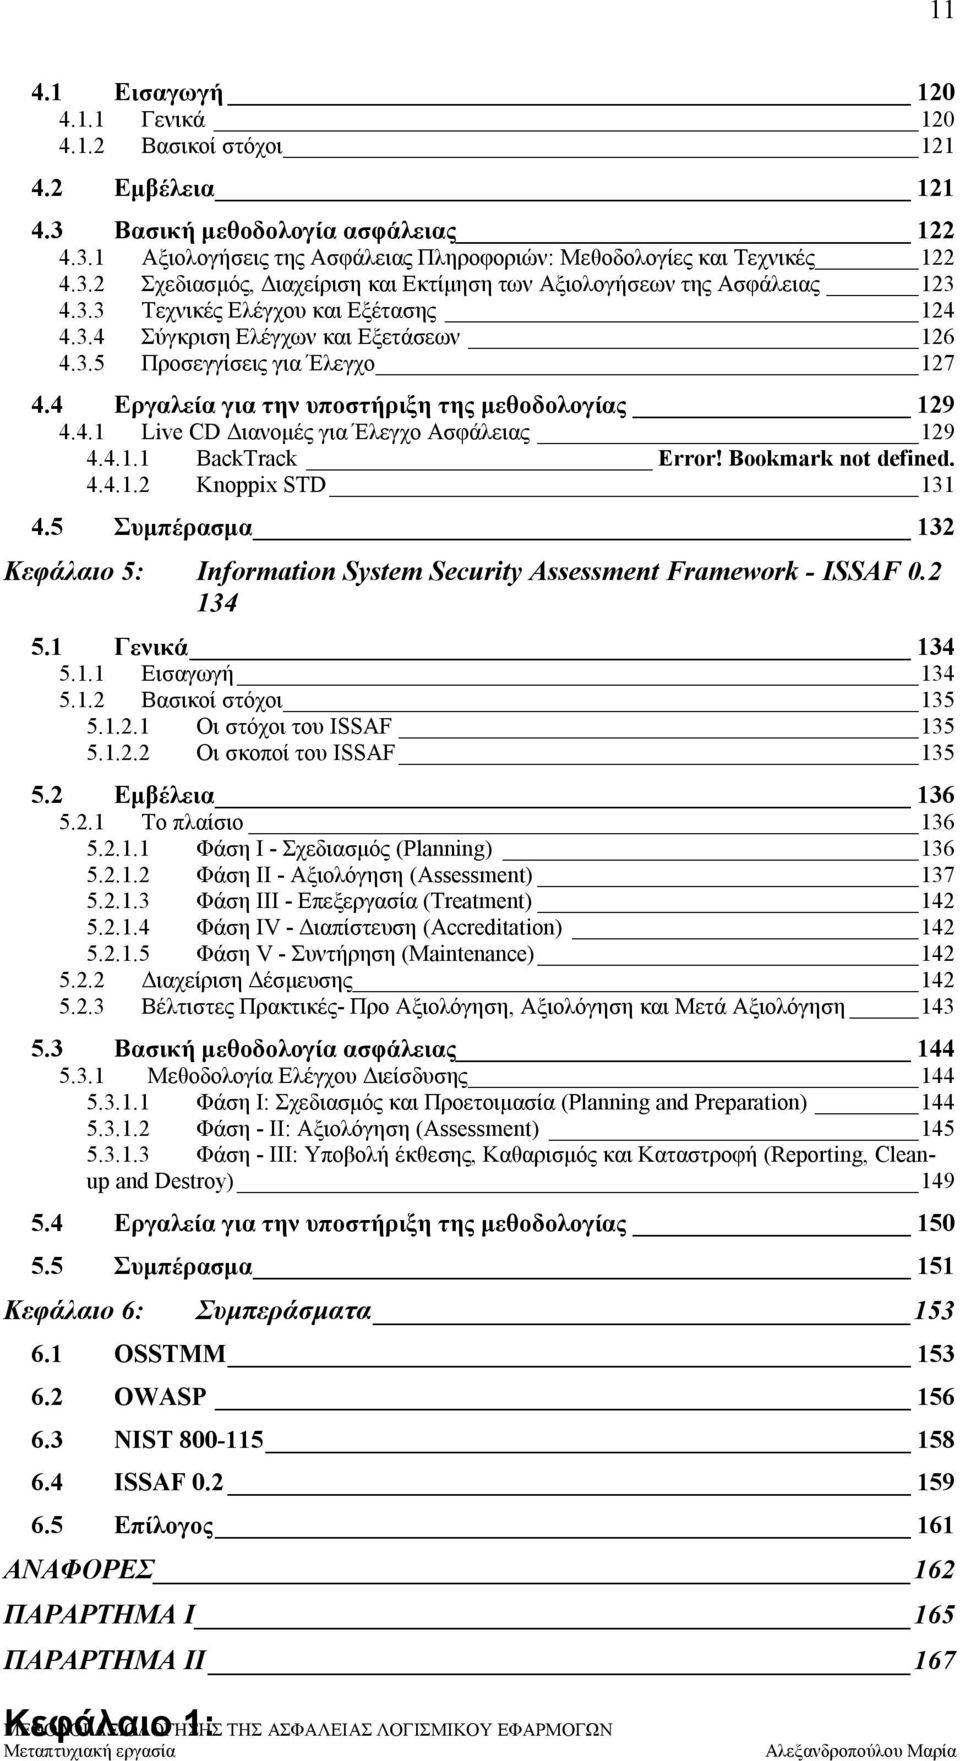 4.1.1 BackTrack Error! Bookmark not defined. 4.4.1.2 Knoppix STD 131 4.5 Συμπέρασμα 132 Κεφάλαιο 5: Information System Security Assessment Framework - ISSAF 0.2 134 5.1 Γενικά 134 5.1.1 Εισαγωγή 134 5.